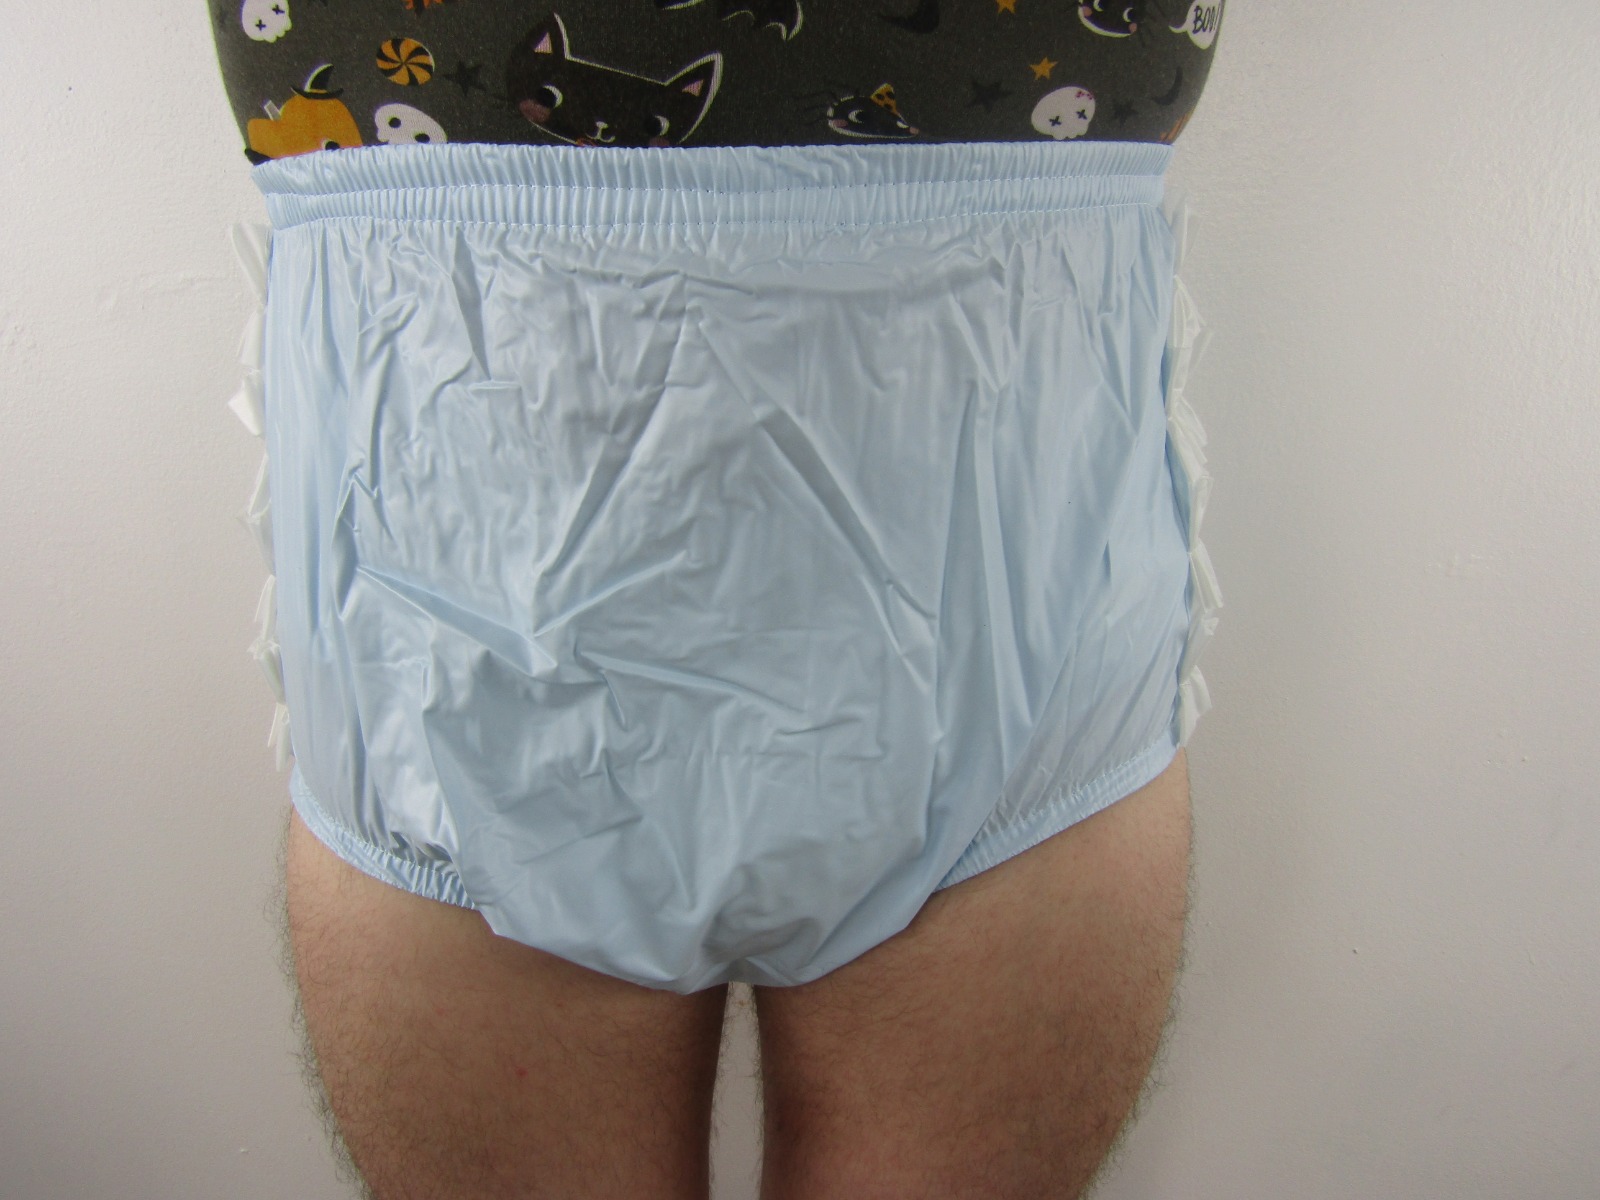 PVC/Plastic Pants/Panties/Knickers in Shiny Semi Clear White, Pearly PVC 4  Sizes (Heavy PVC) (Size 1 (M)) : Amazon.co.uk: Fashion